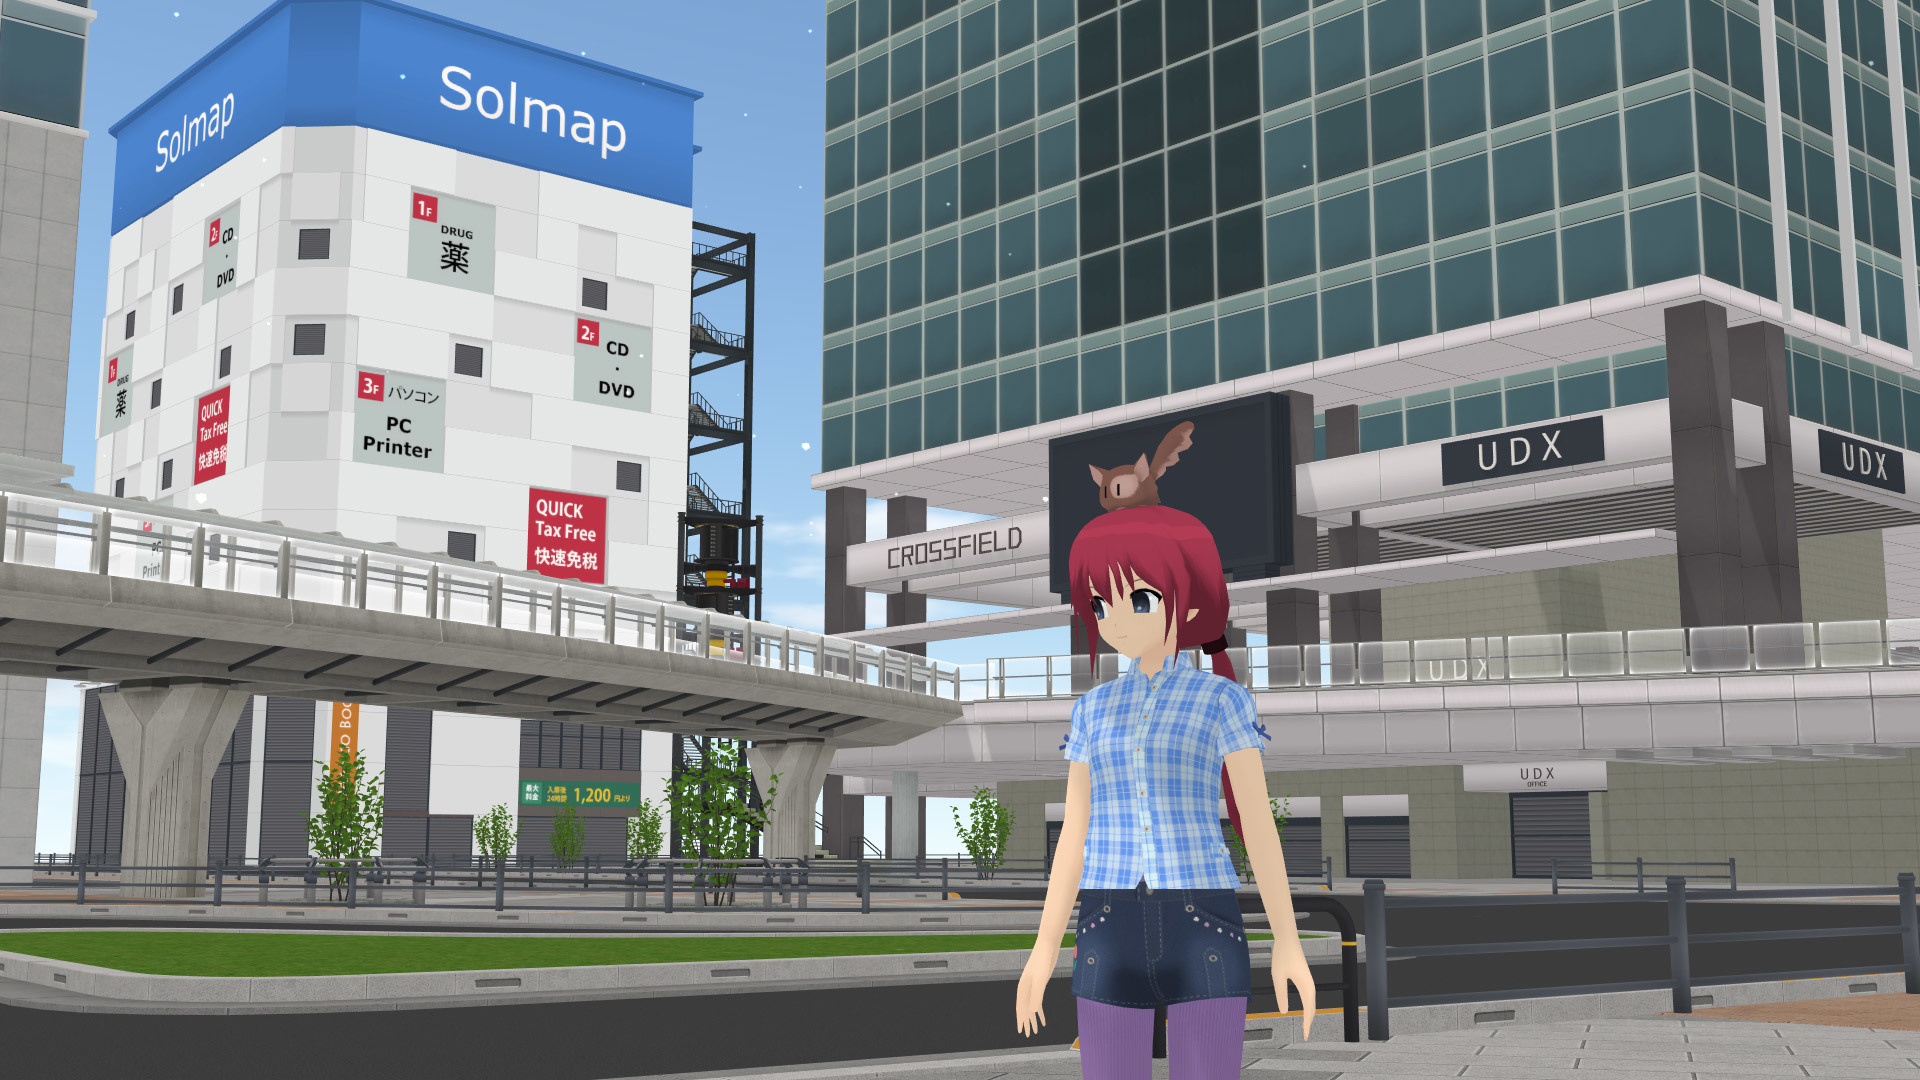 Shoujo City – anime dating simulator